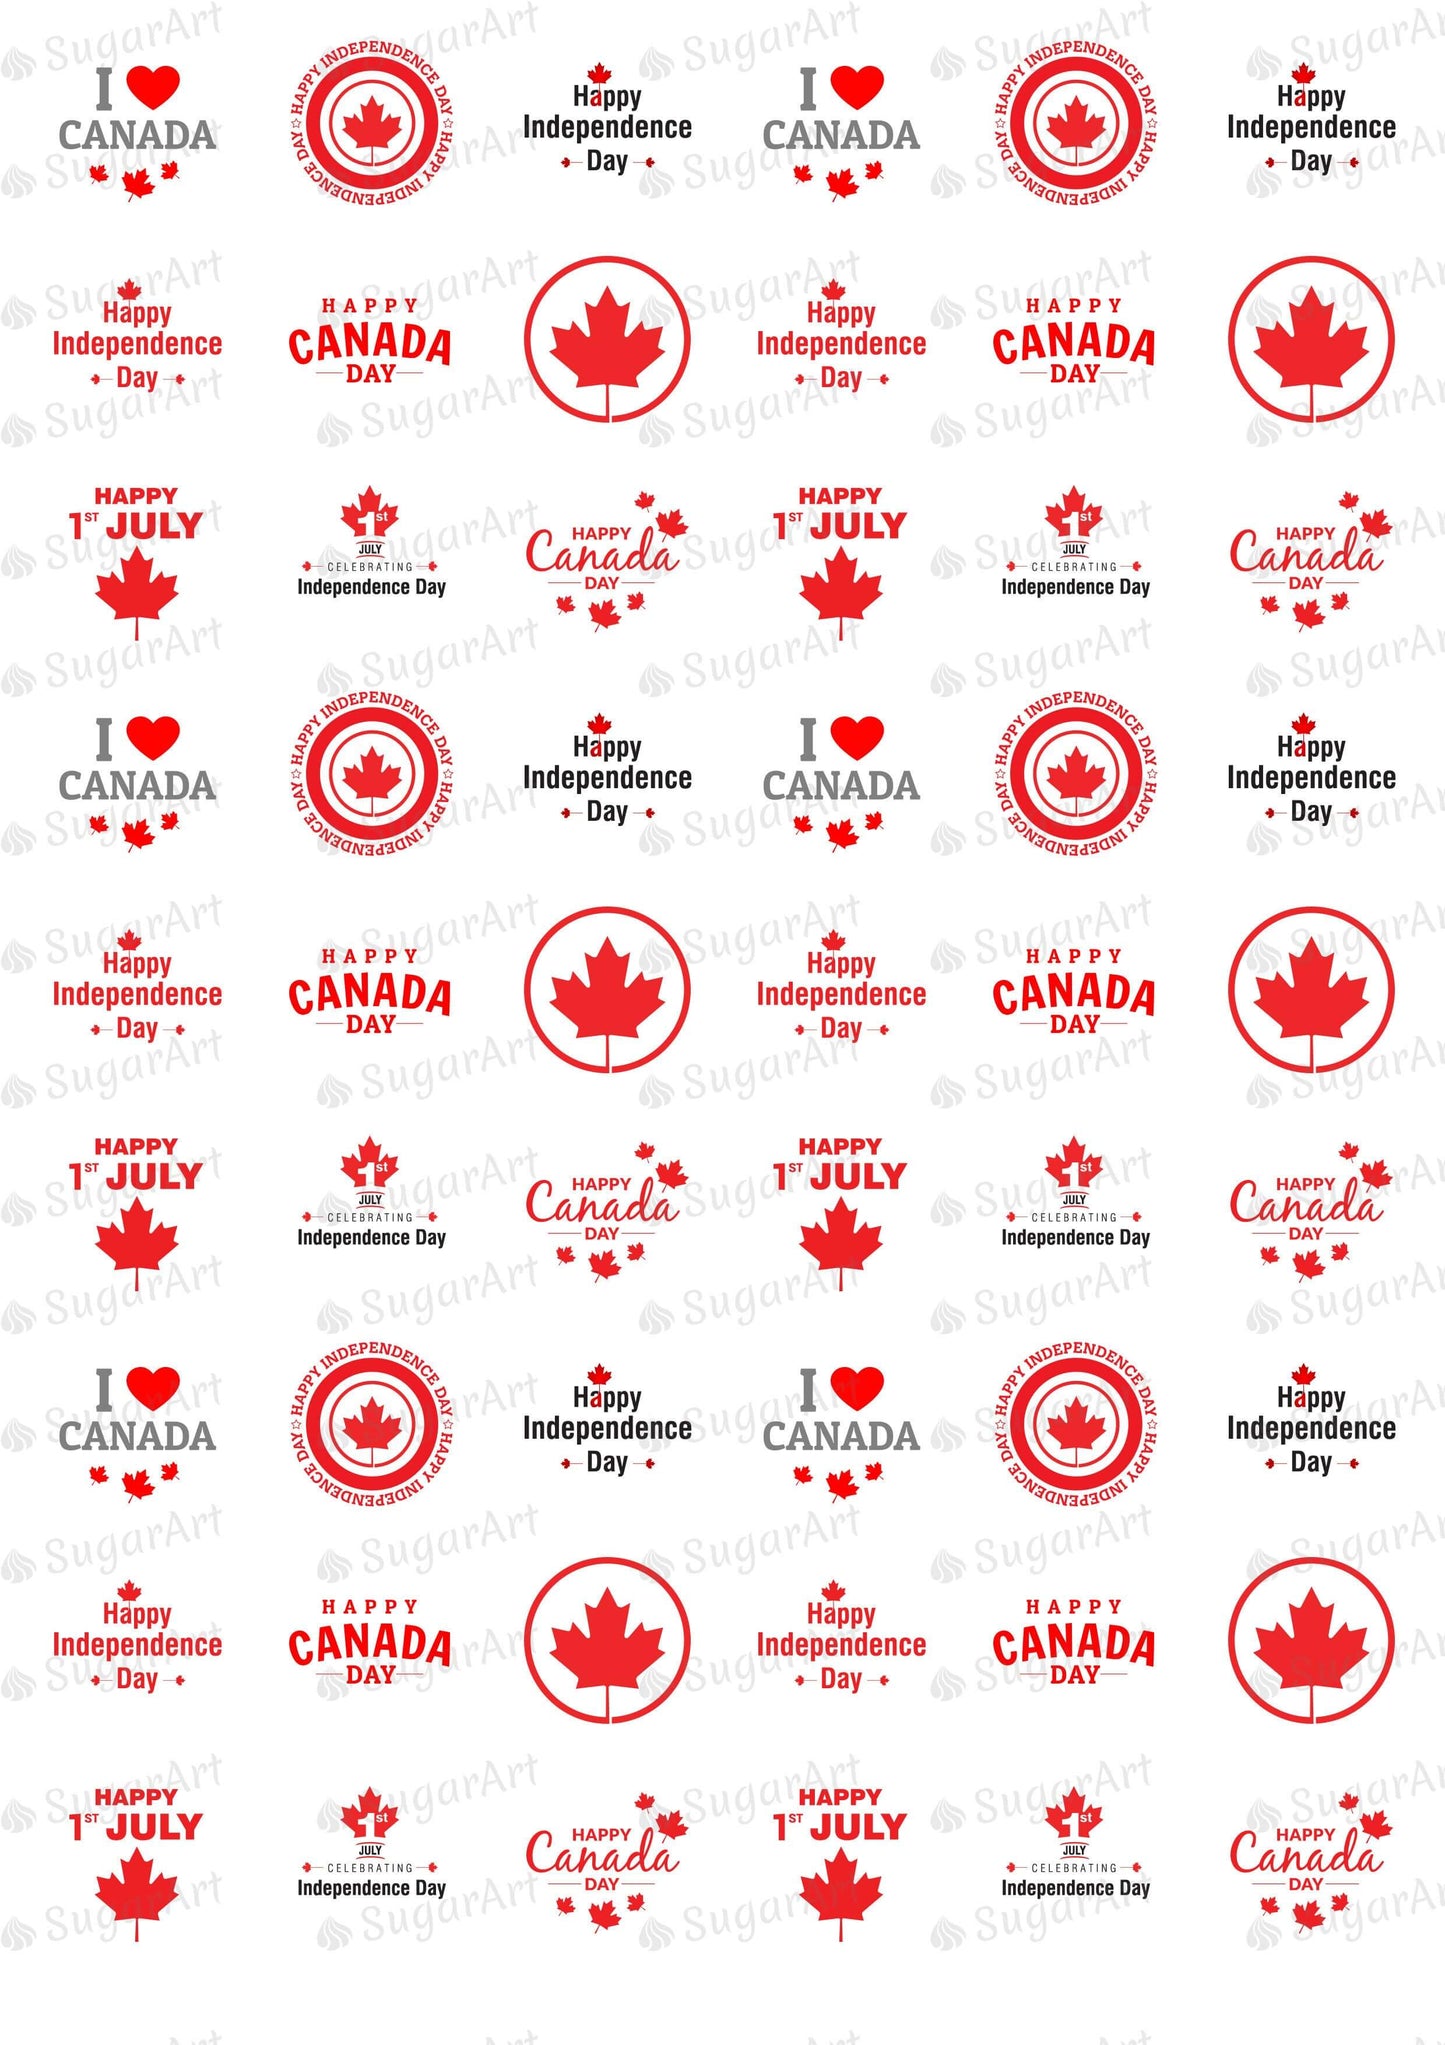 Happy Canada Day!!! - HSA037-Sugar Stamp sheets-Sugar Art